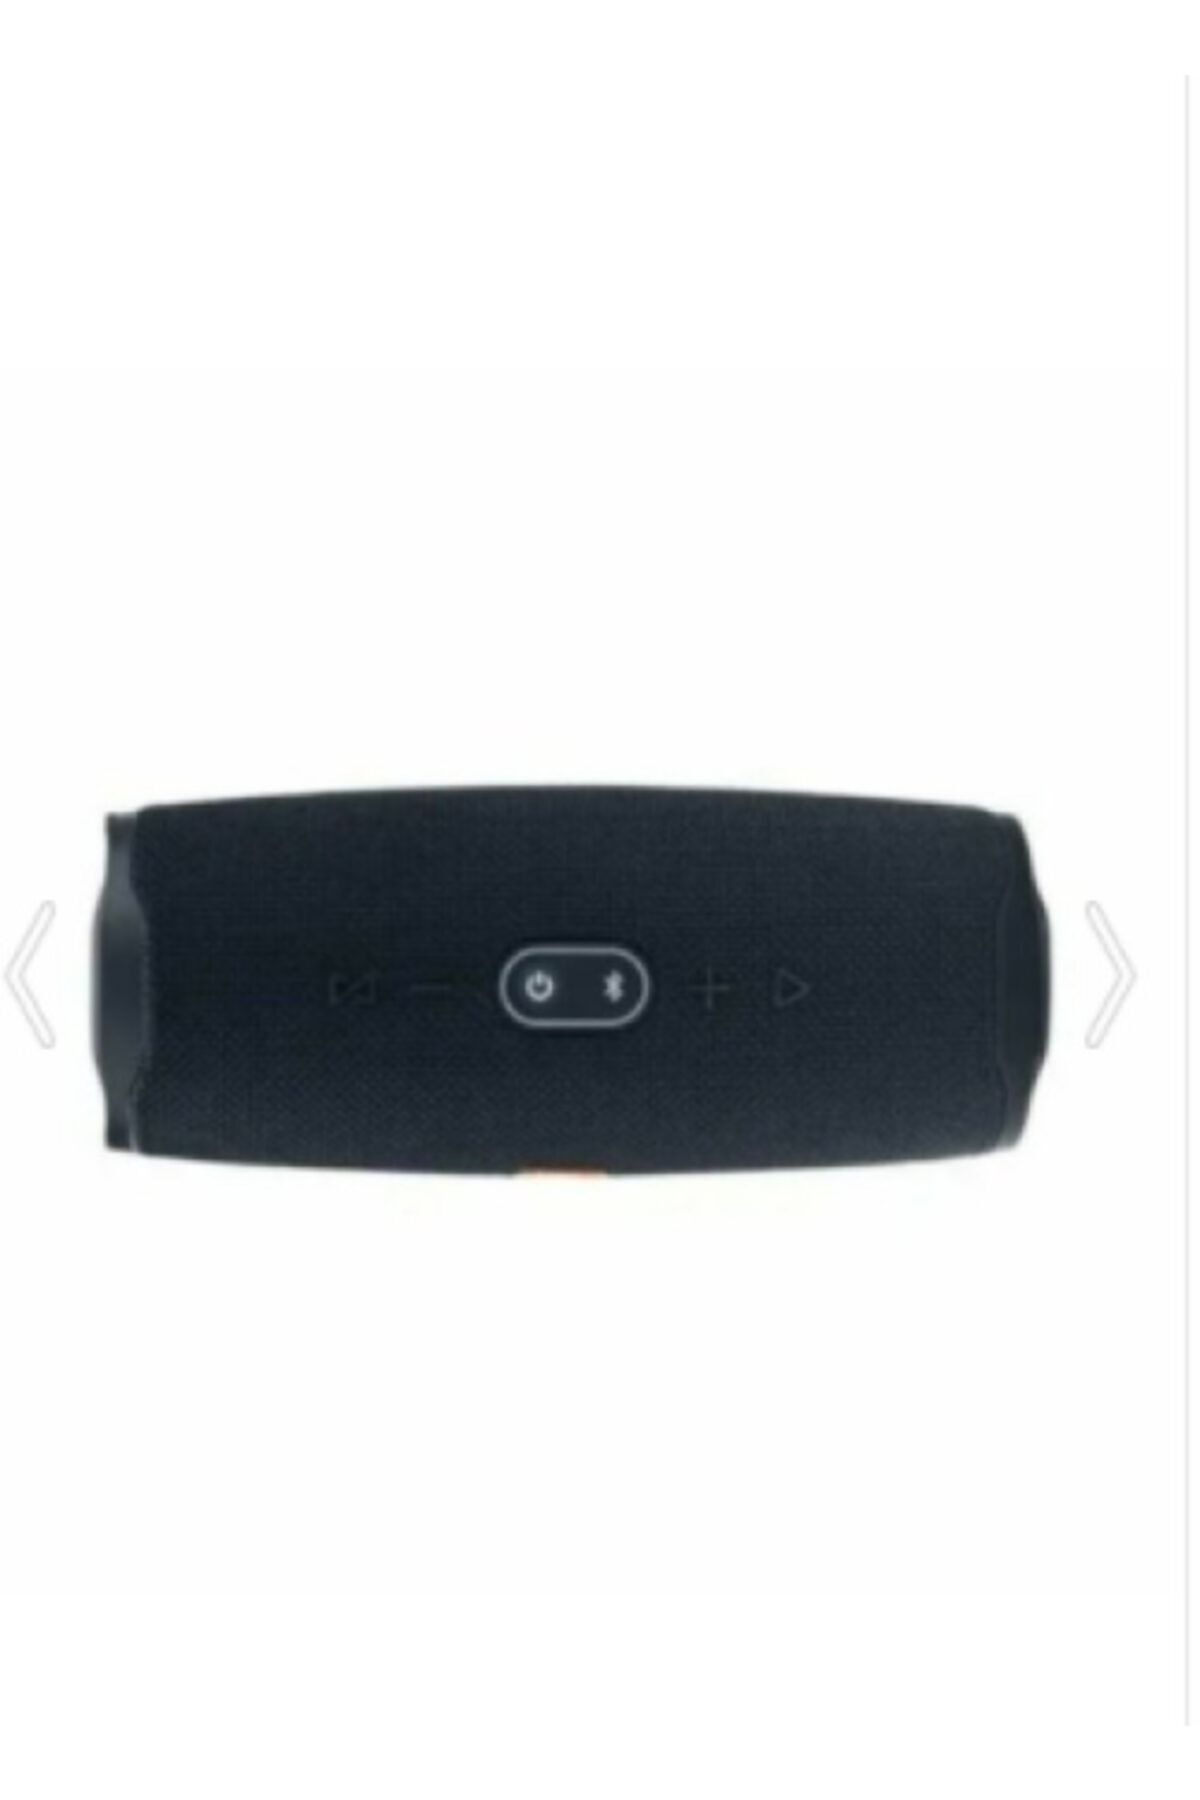 Polygold Charge 4 Siyah Bluetooth Hoparlör Speaker Wireless Ses Bombası